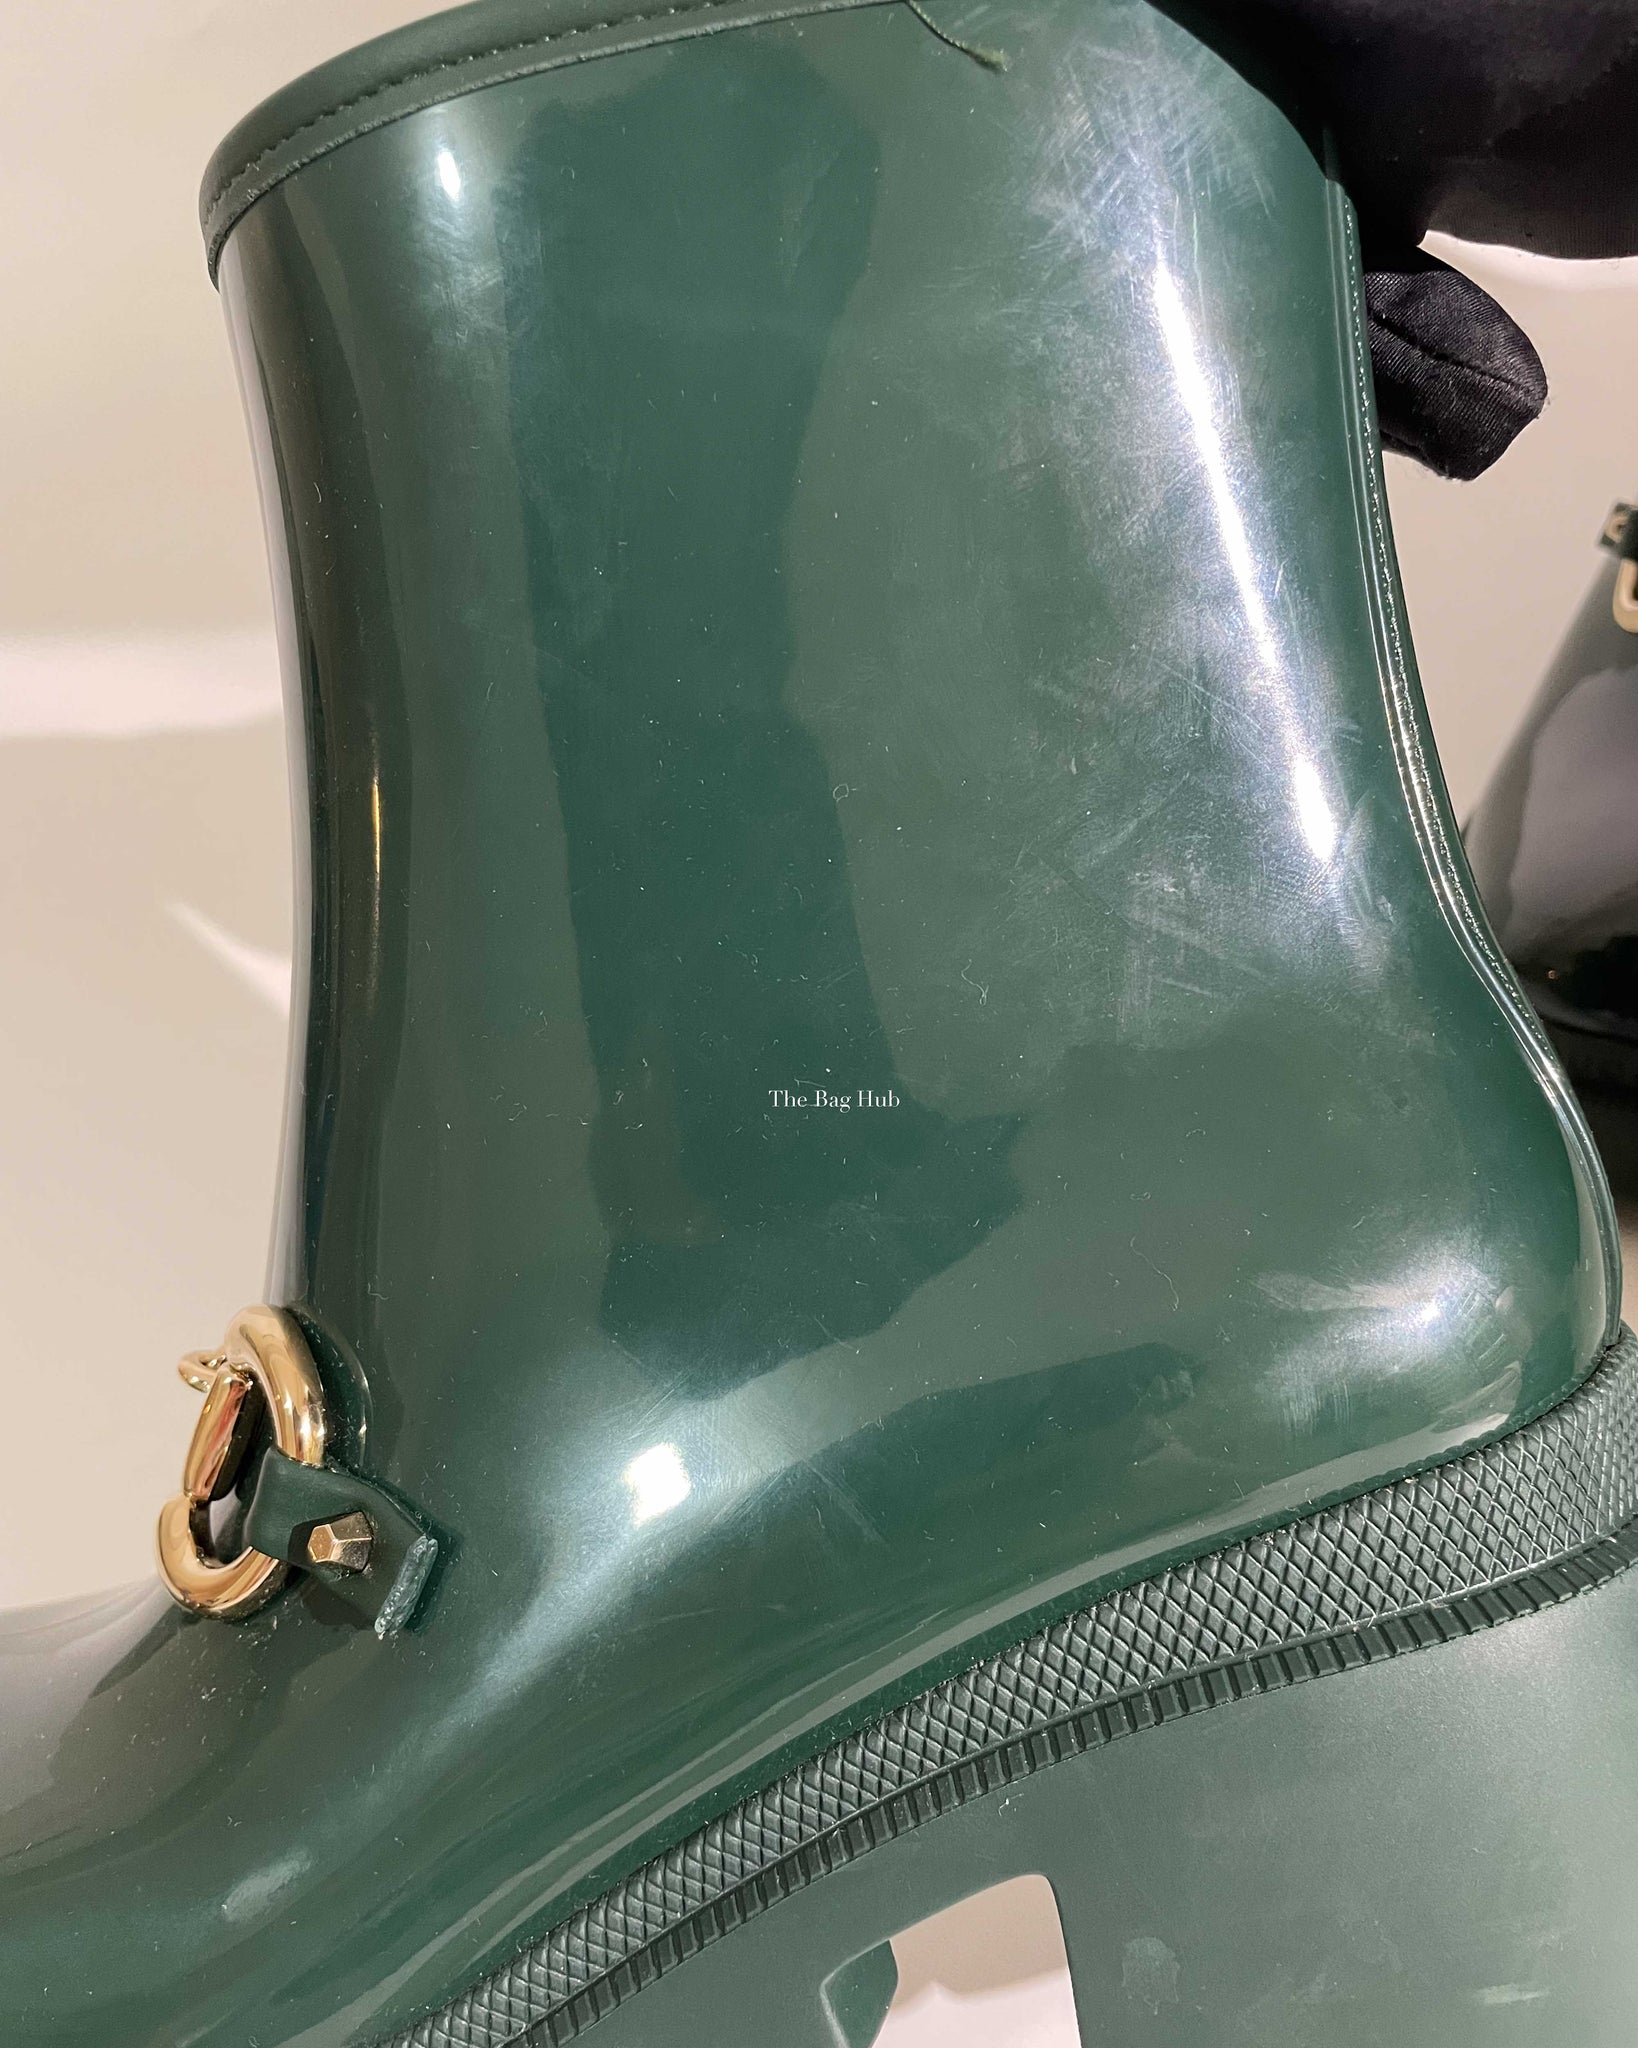 Gucci 1955 Horsebit Accent Rubber Rain Boots w/ Tags - ShopStyle